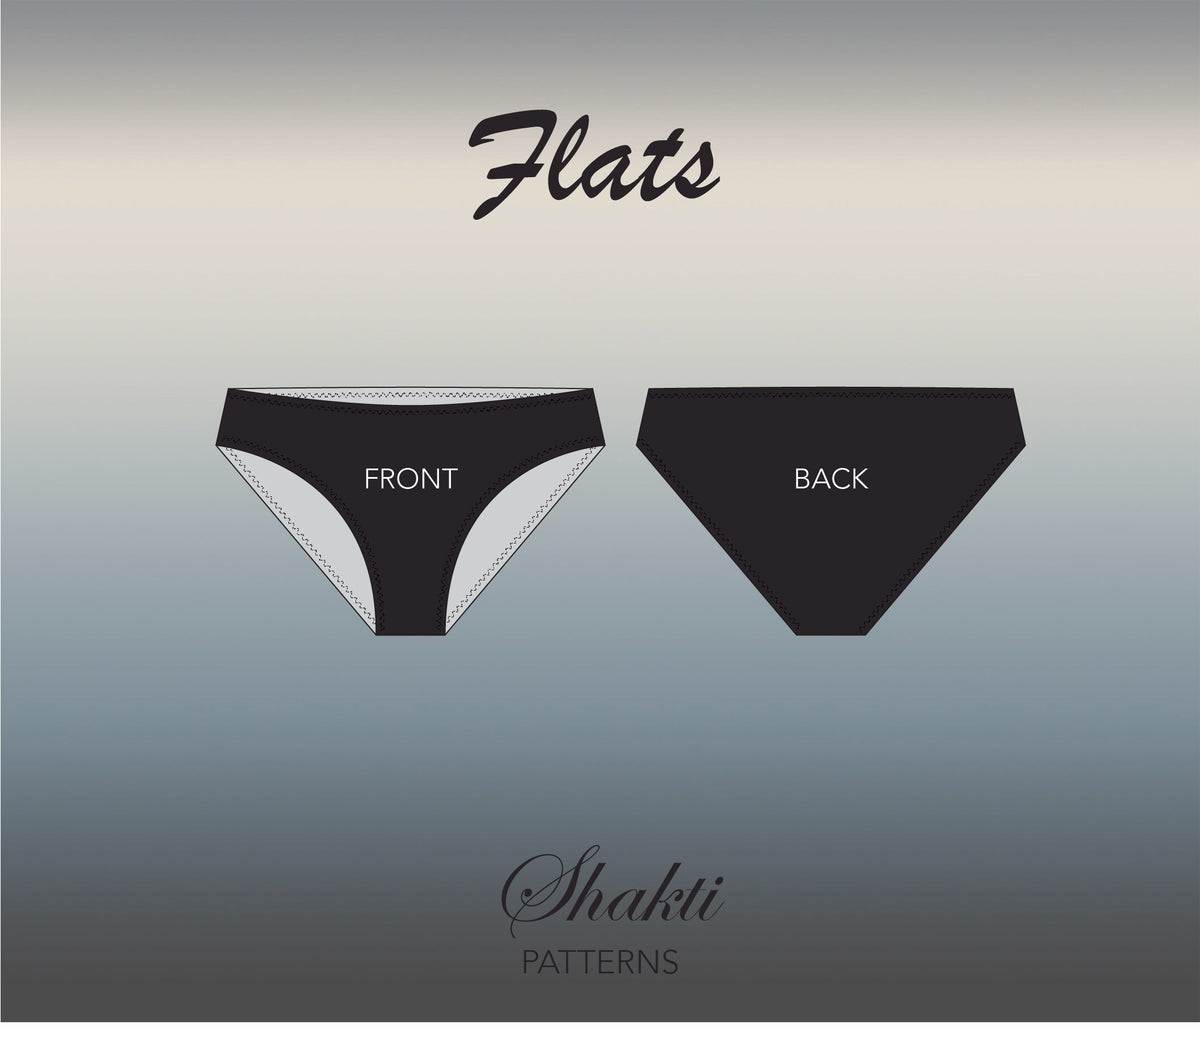 Women's Pants Sewing Pattern, 6 Sizes XS-XXL, Instant Download